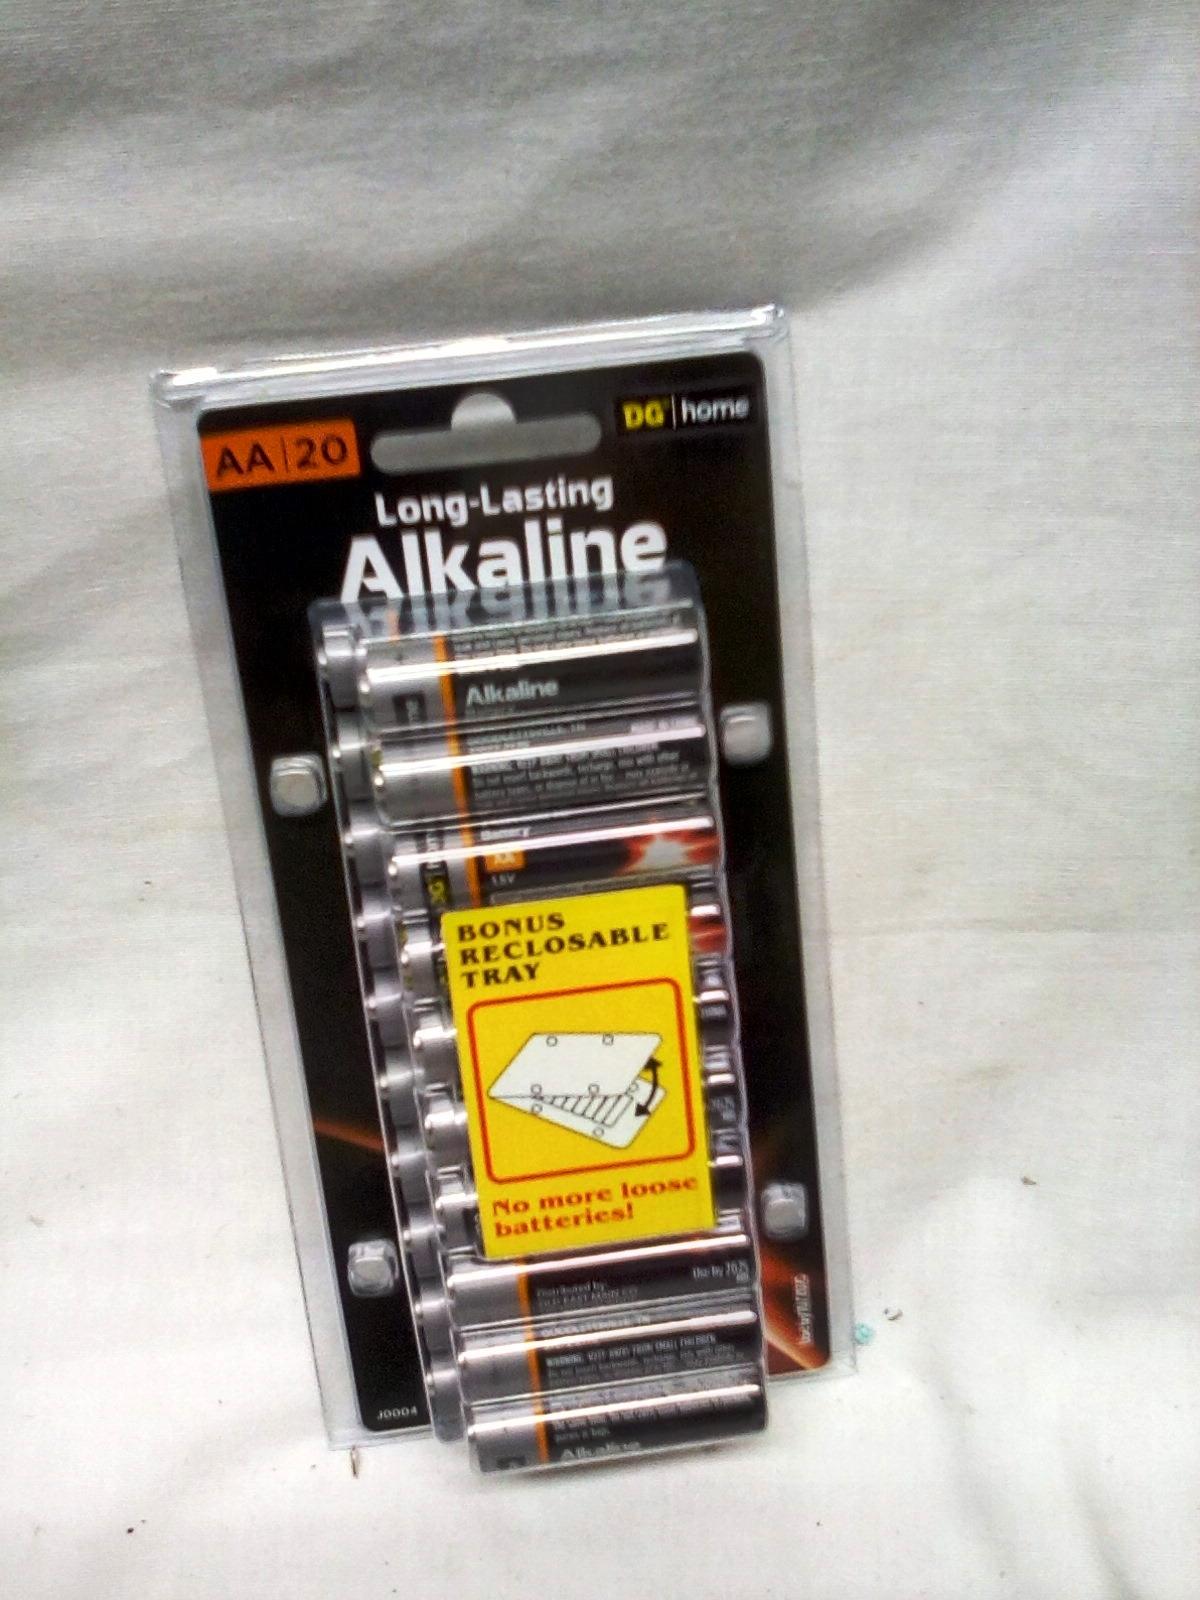 Long Lasting Alkaline AA Batteries Qty. 20 per pack